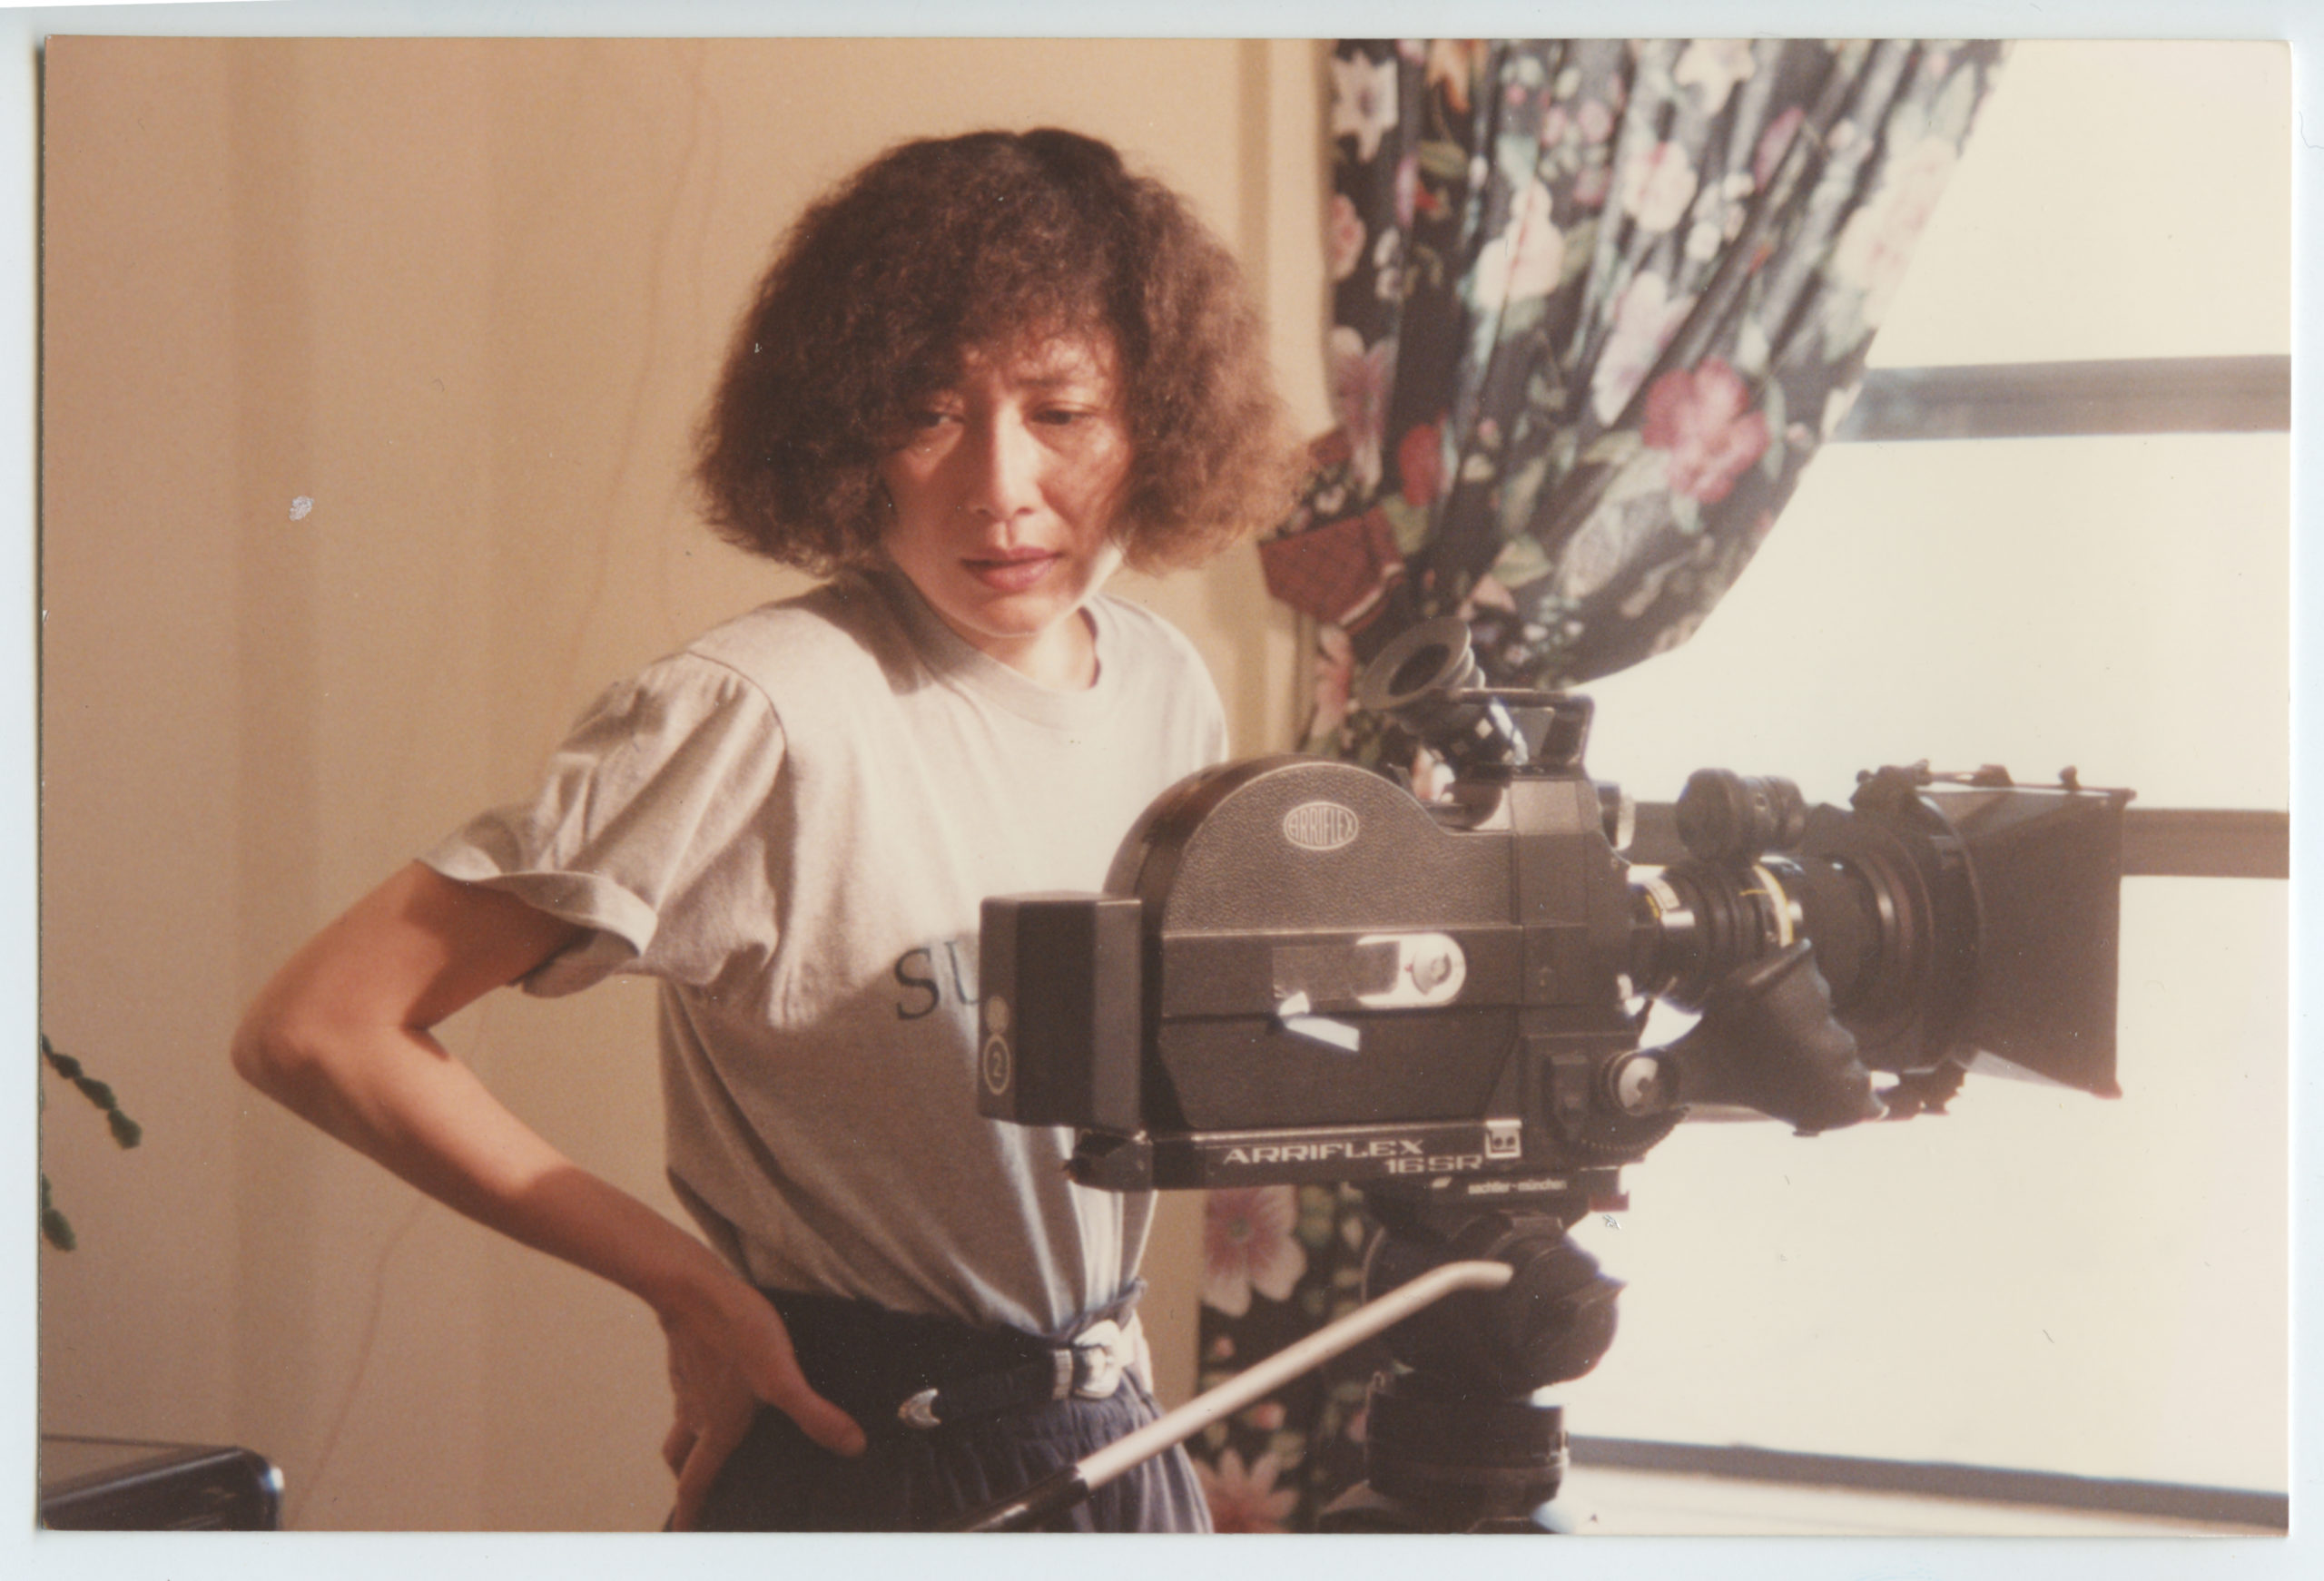 Filmmaker Christine Choy behind the camera. Photograph courtesy of Christine Choy.